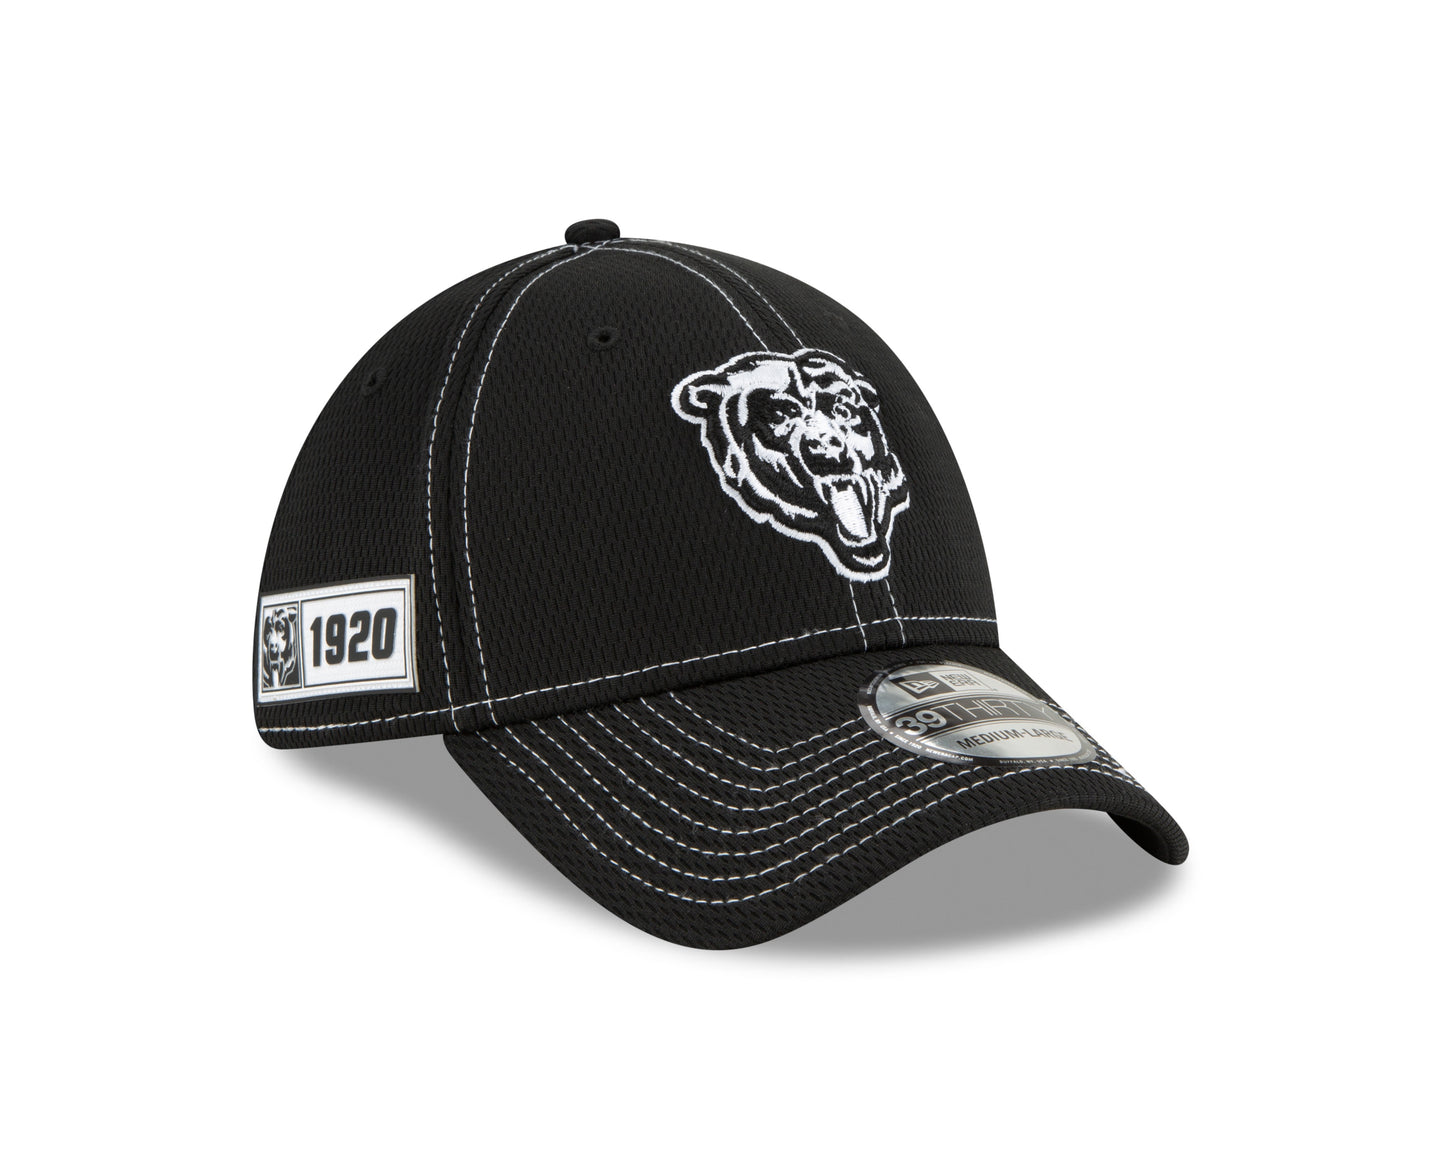 Chicago Bears 2019 Established Collection Sideline Road Black Bear Head Logo 39THIRTY Flex Hat